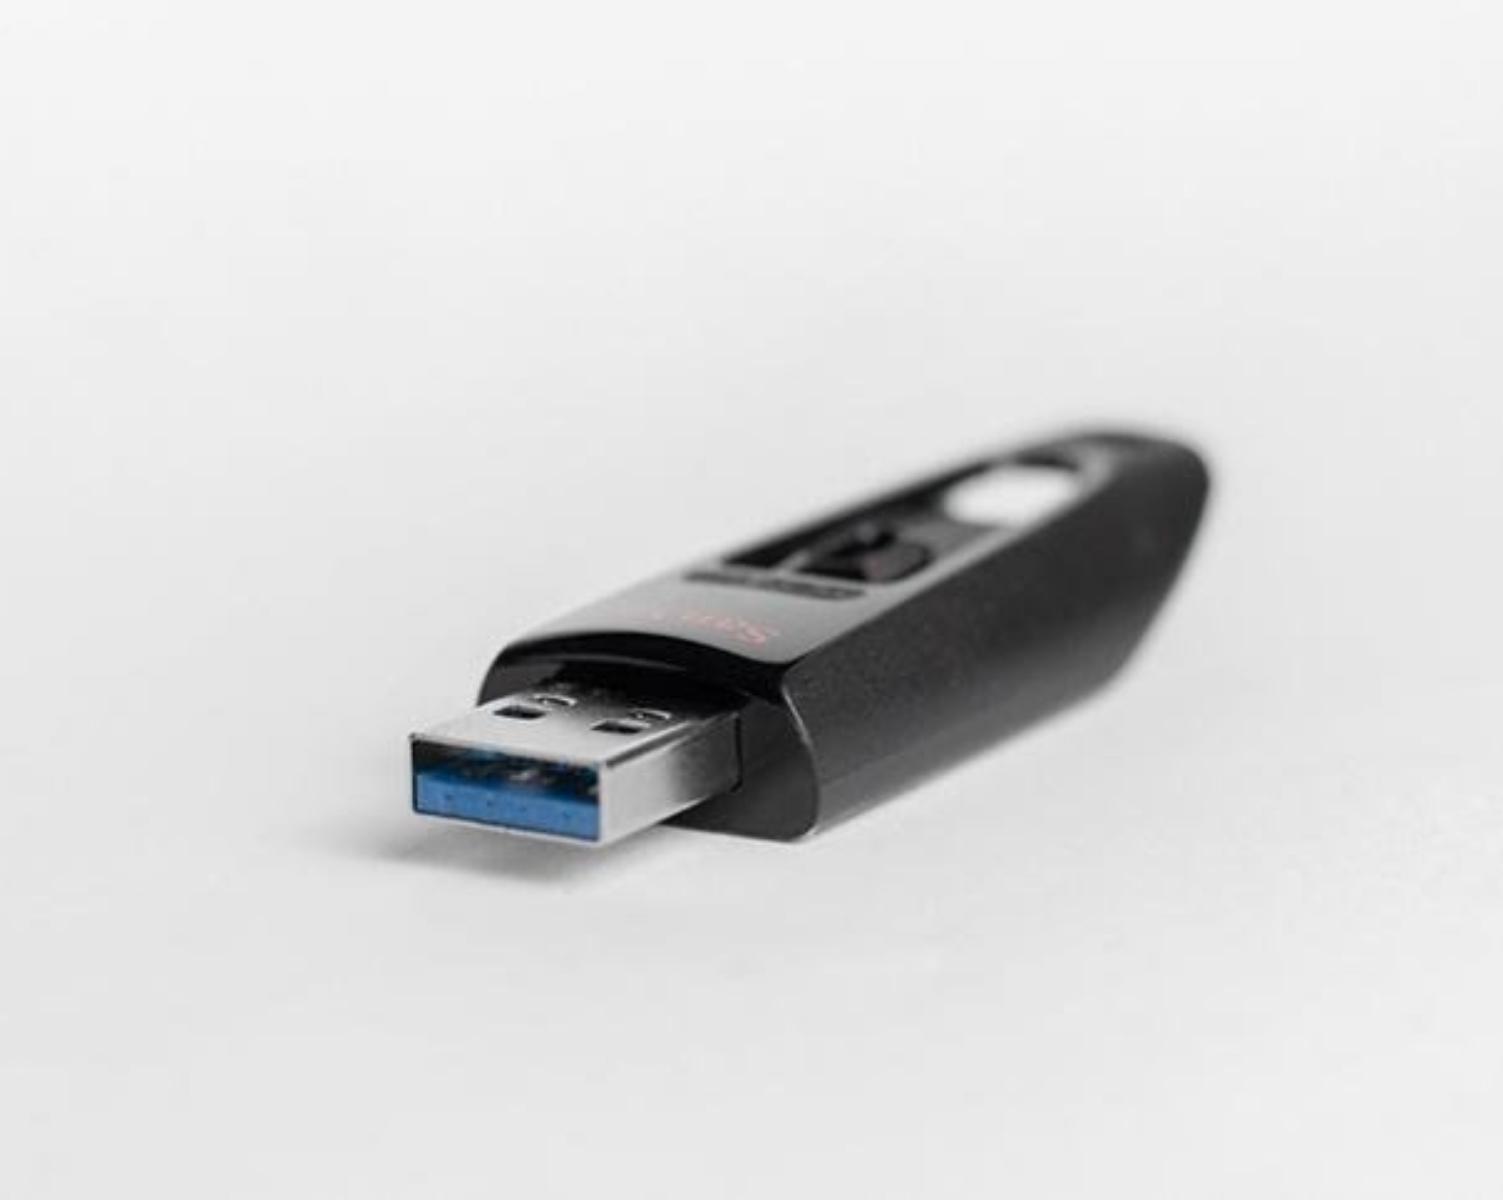 12. The USB (Universal Serial Bus) 